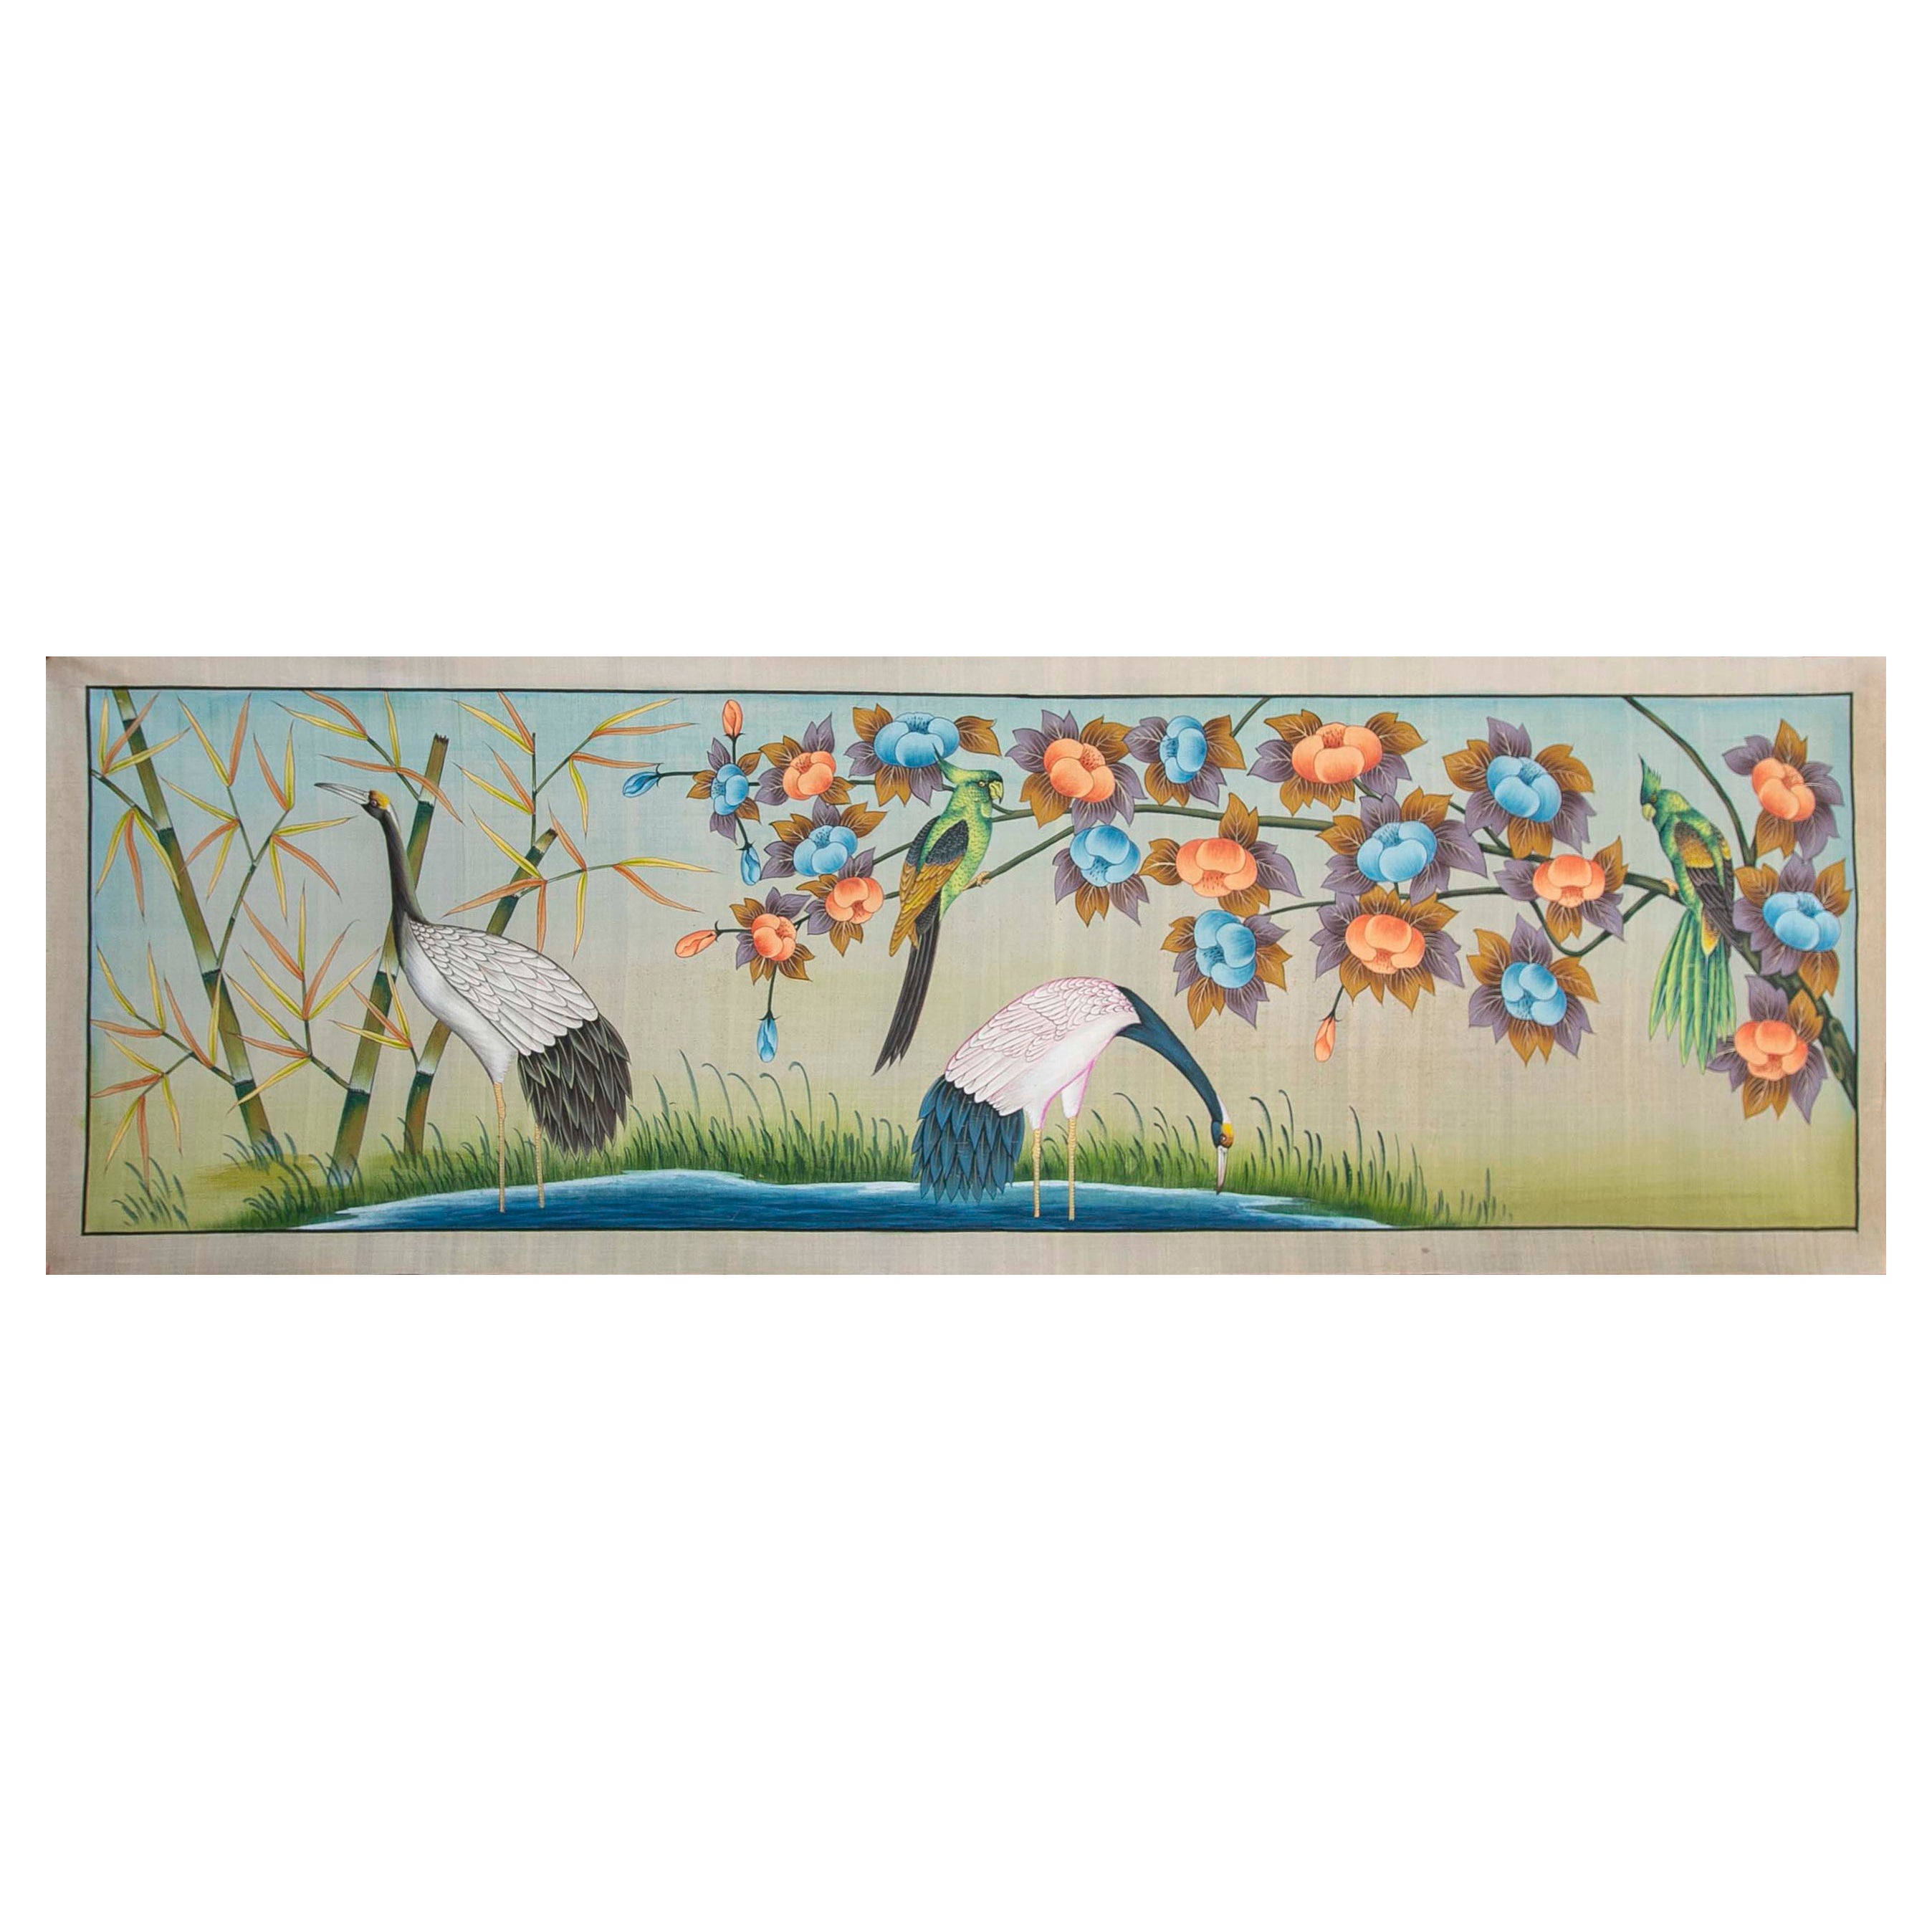 Cuadro De Aves En Lago Con Flores Pintado a Mano Sobre Lienzo Años, 1970 For Sale